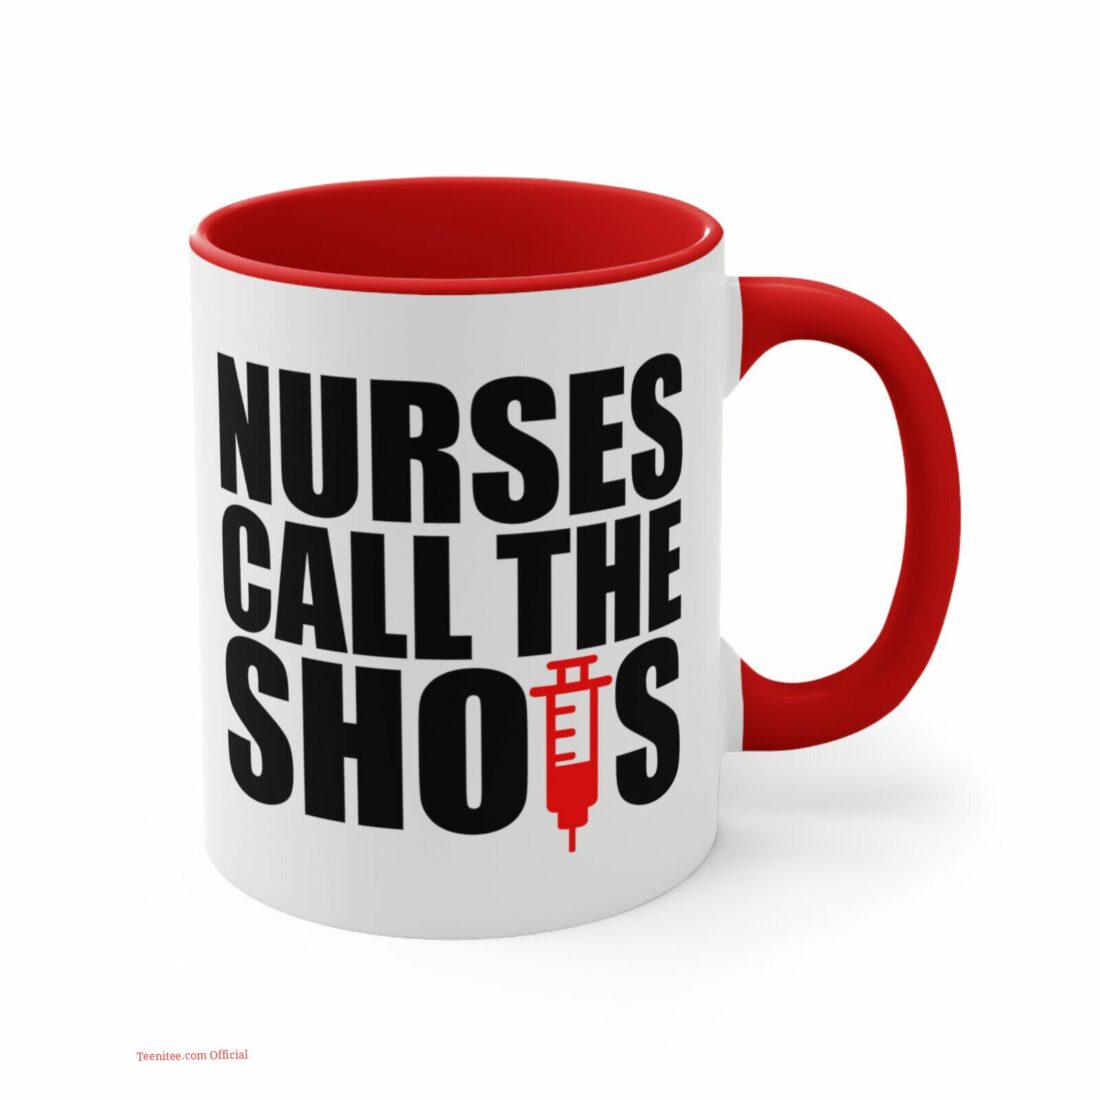 Nurse call the shot| cute gift mug for mom or daughter - 11oz